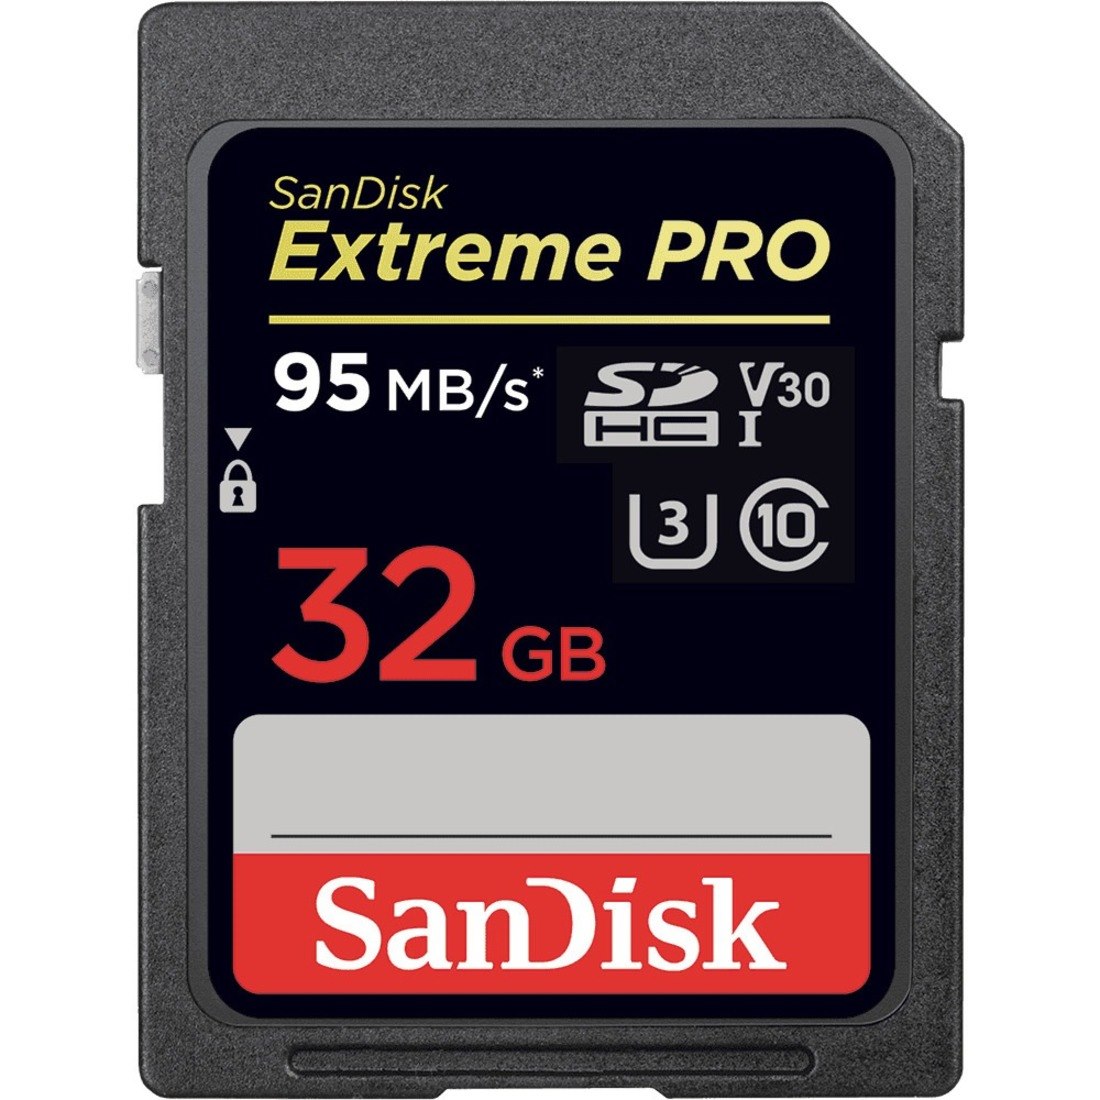 SanDisk Extreme Pro 32 GB UHS-I (U3) SDHC